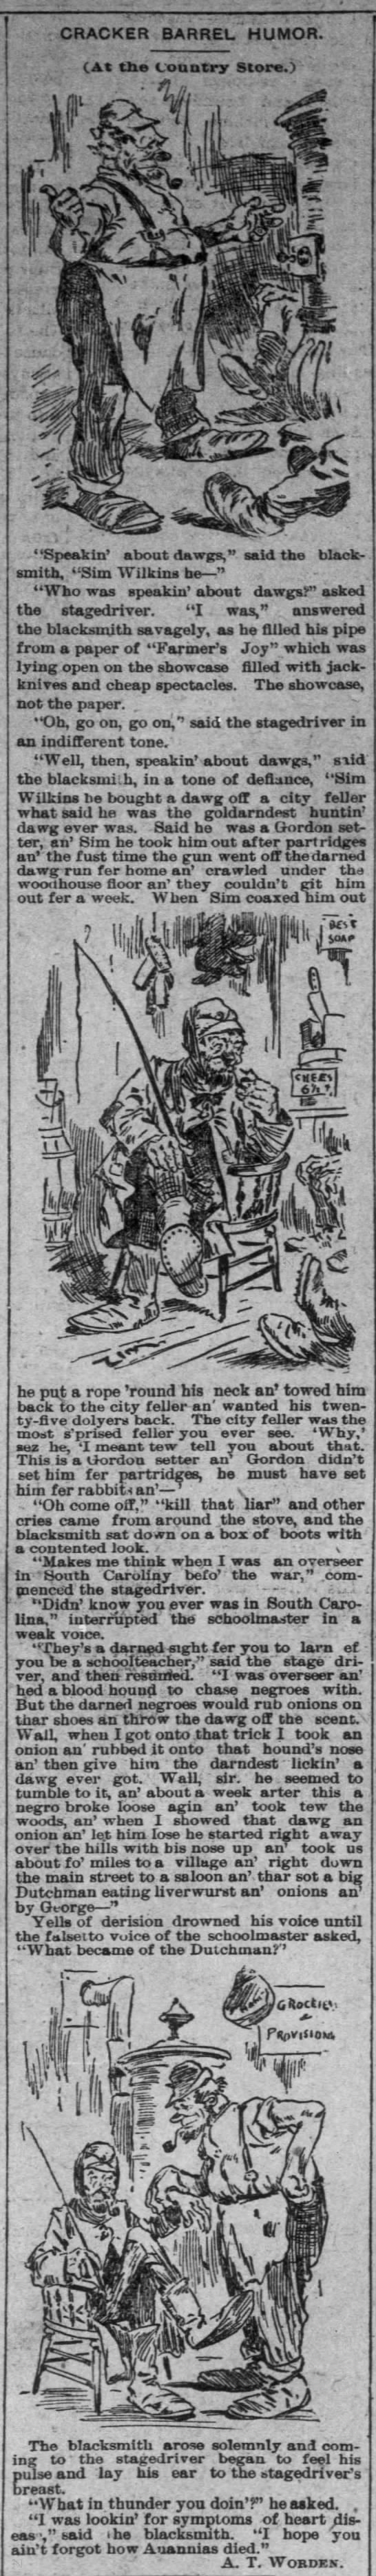 Cracker Barrel Humor (1894). - 